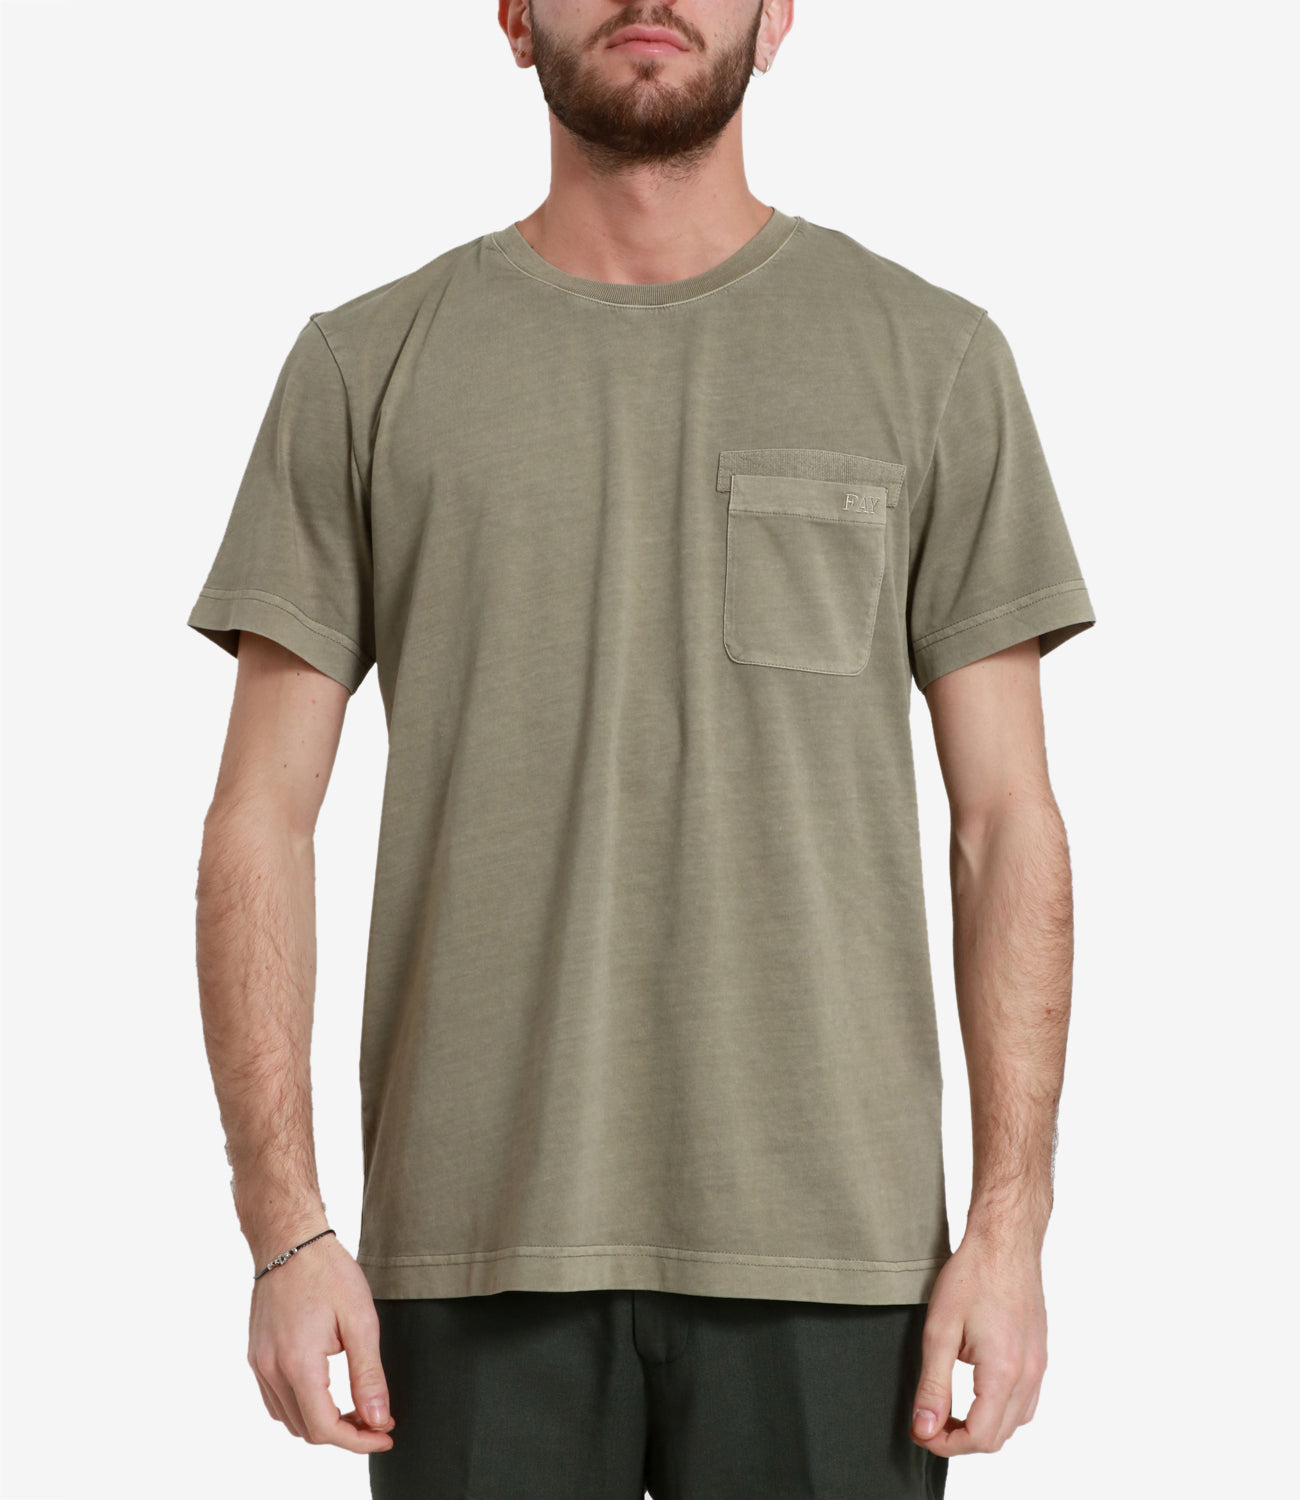 Fay | T-Shirt Military Green